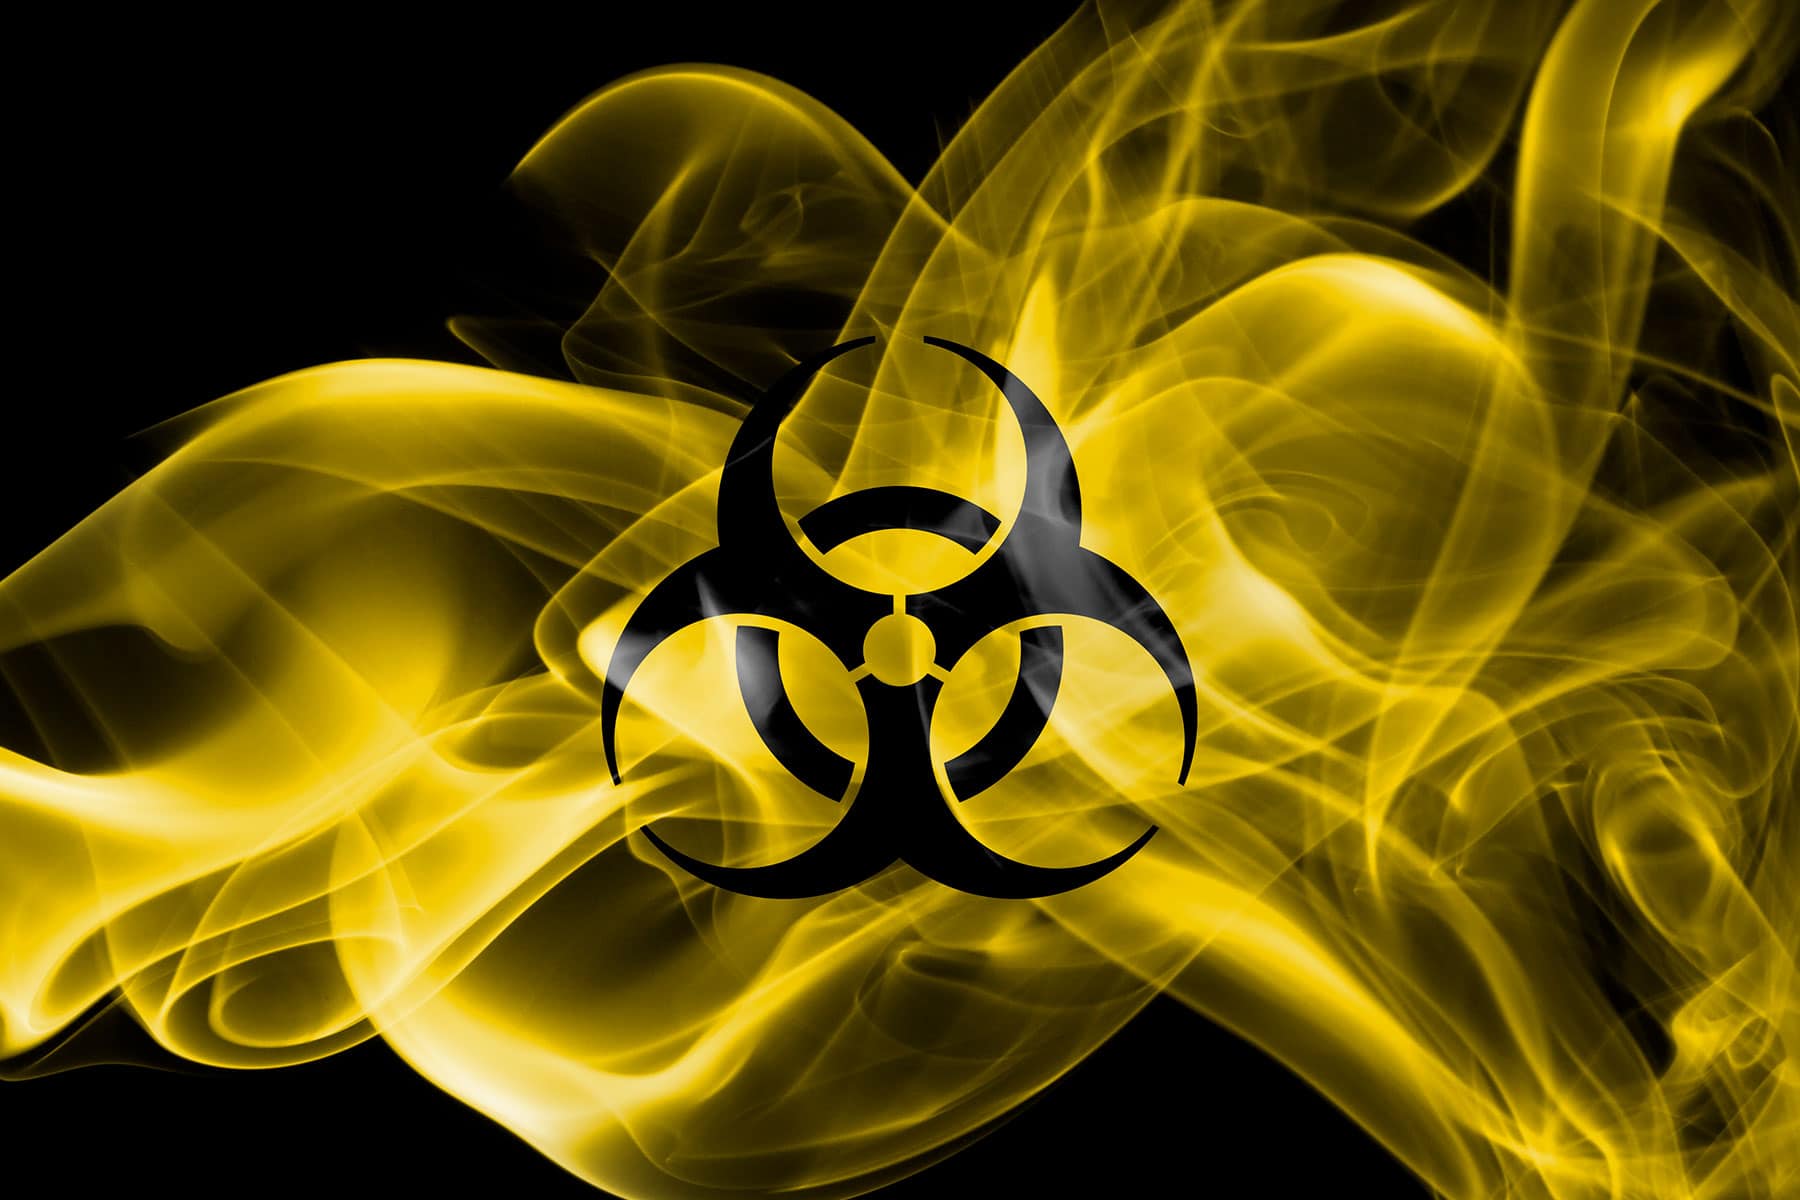 Biohazard icon against a background.